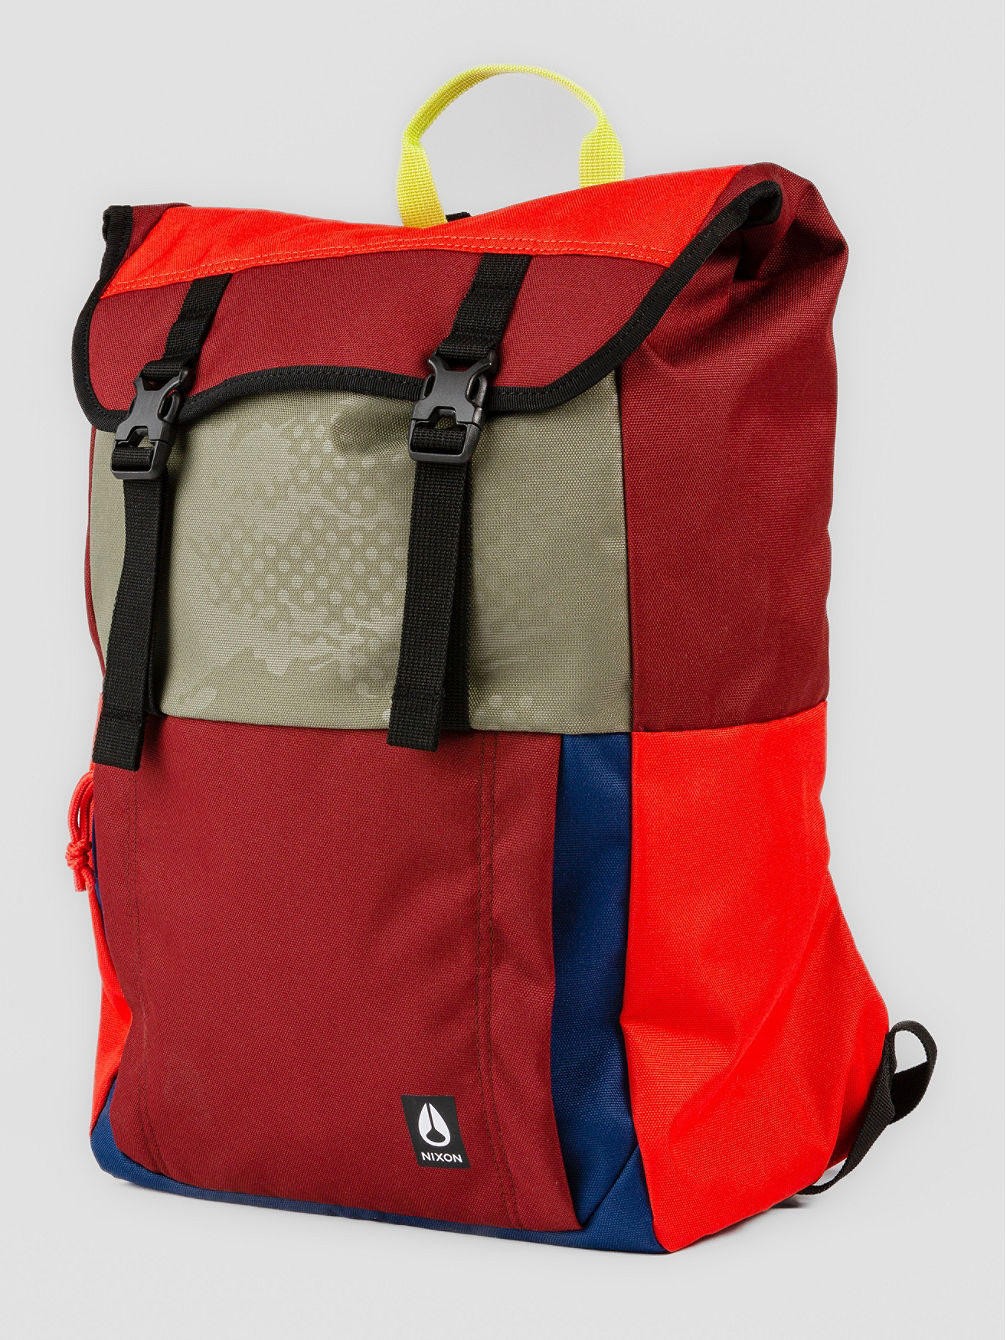 Mode Backpack